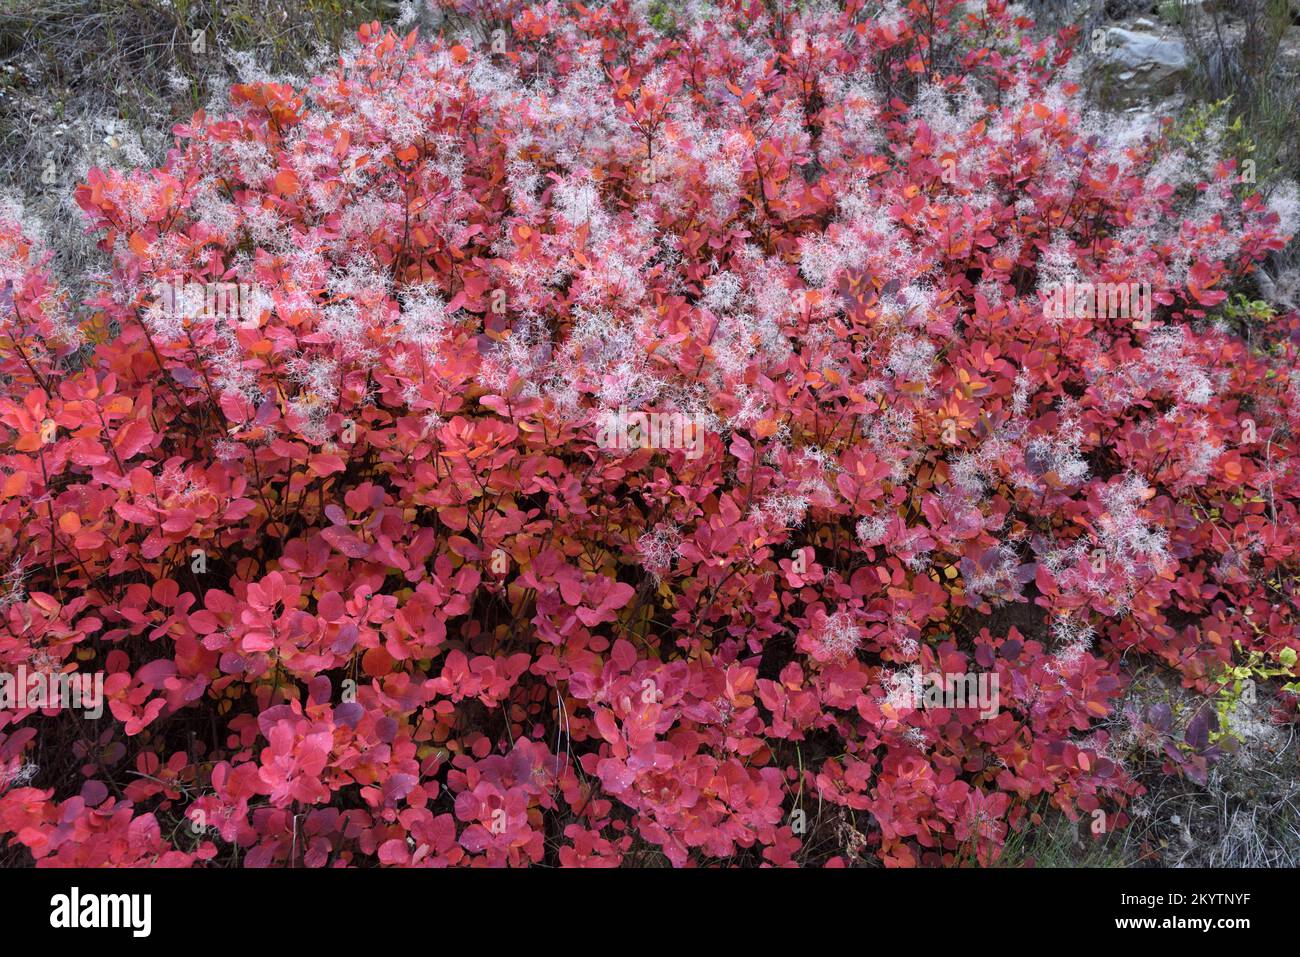 Red Autumn Leaves Flowering Foliage & Seedheads of European Smoketree, Cotinus coggygria, aka Smoke Bush, Venetian Sumach or Dyers Sumac Stock Photo